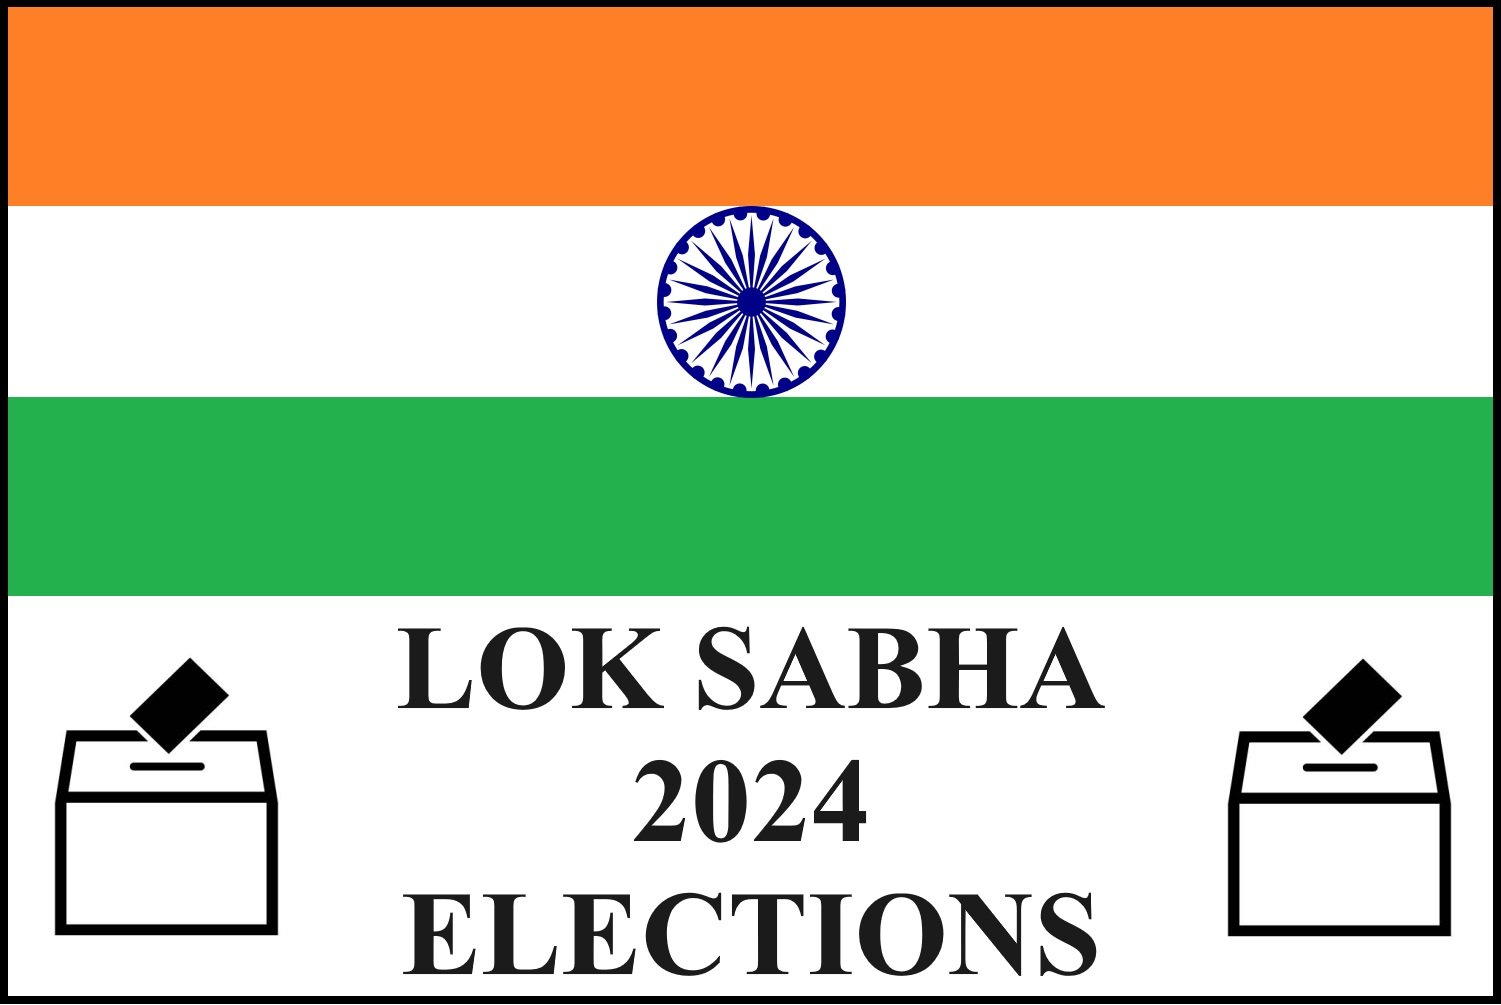 LOK SABHA 2024 ELECTIONS